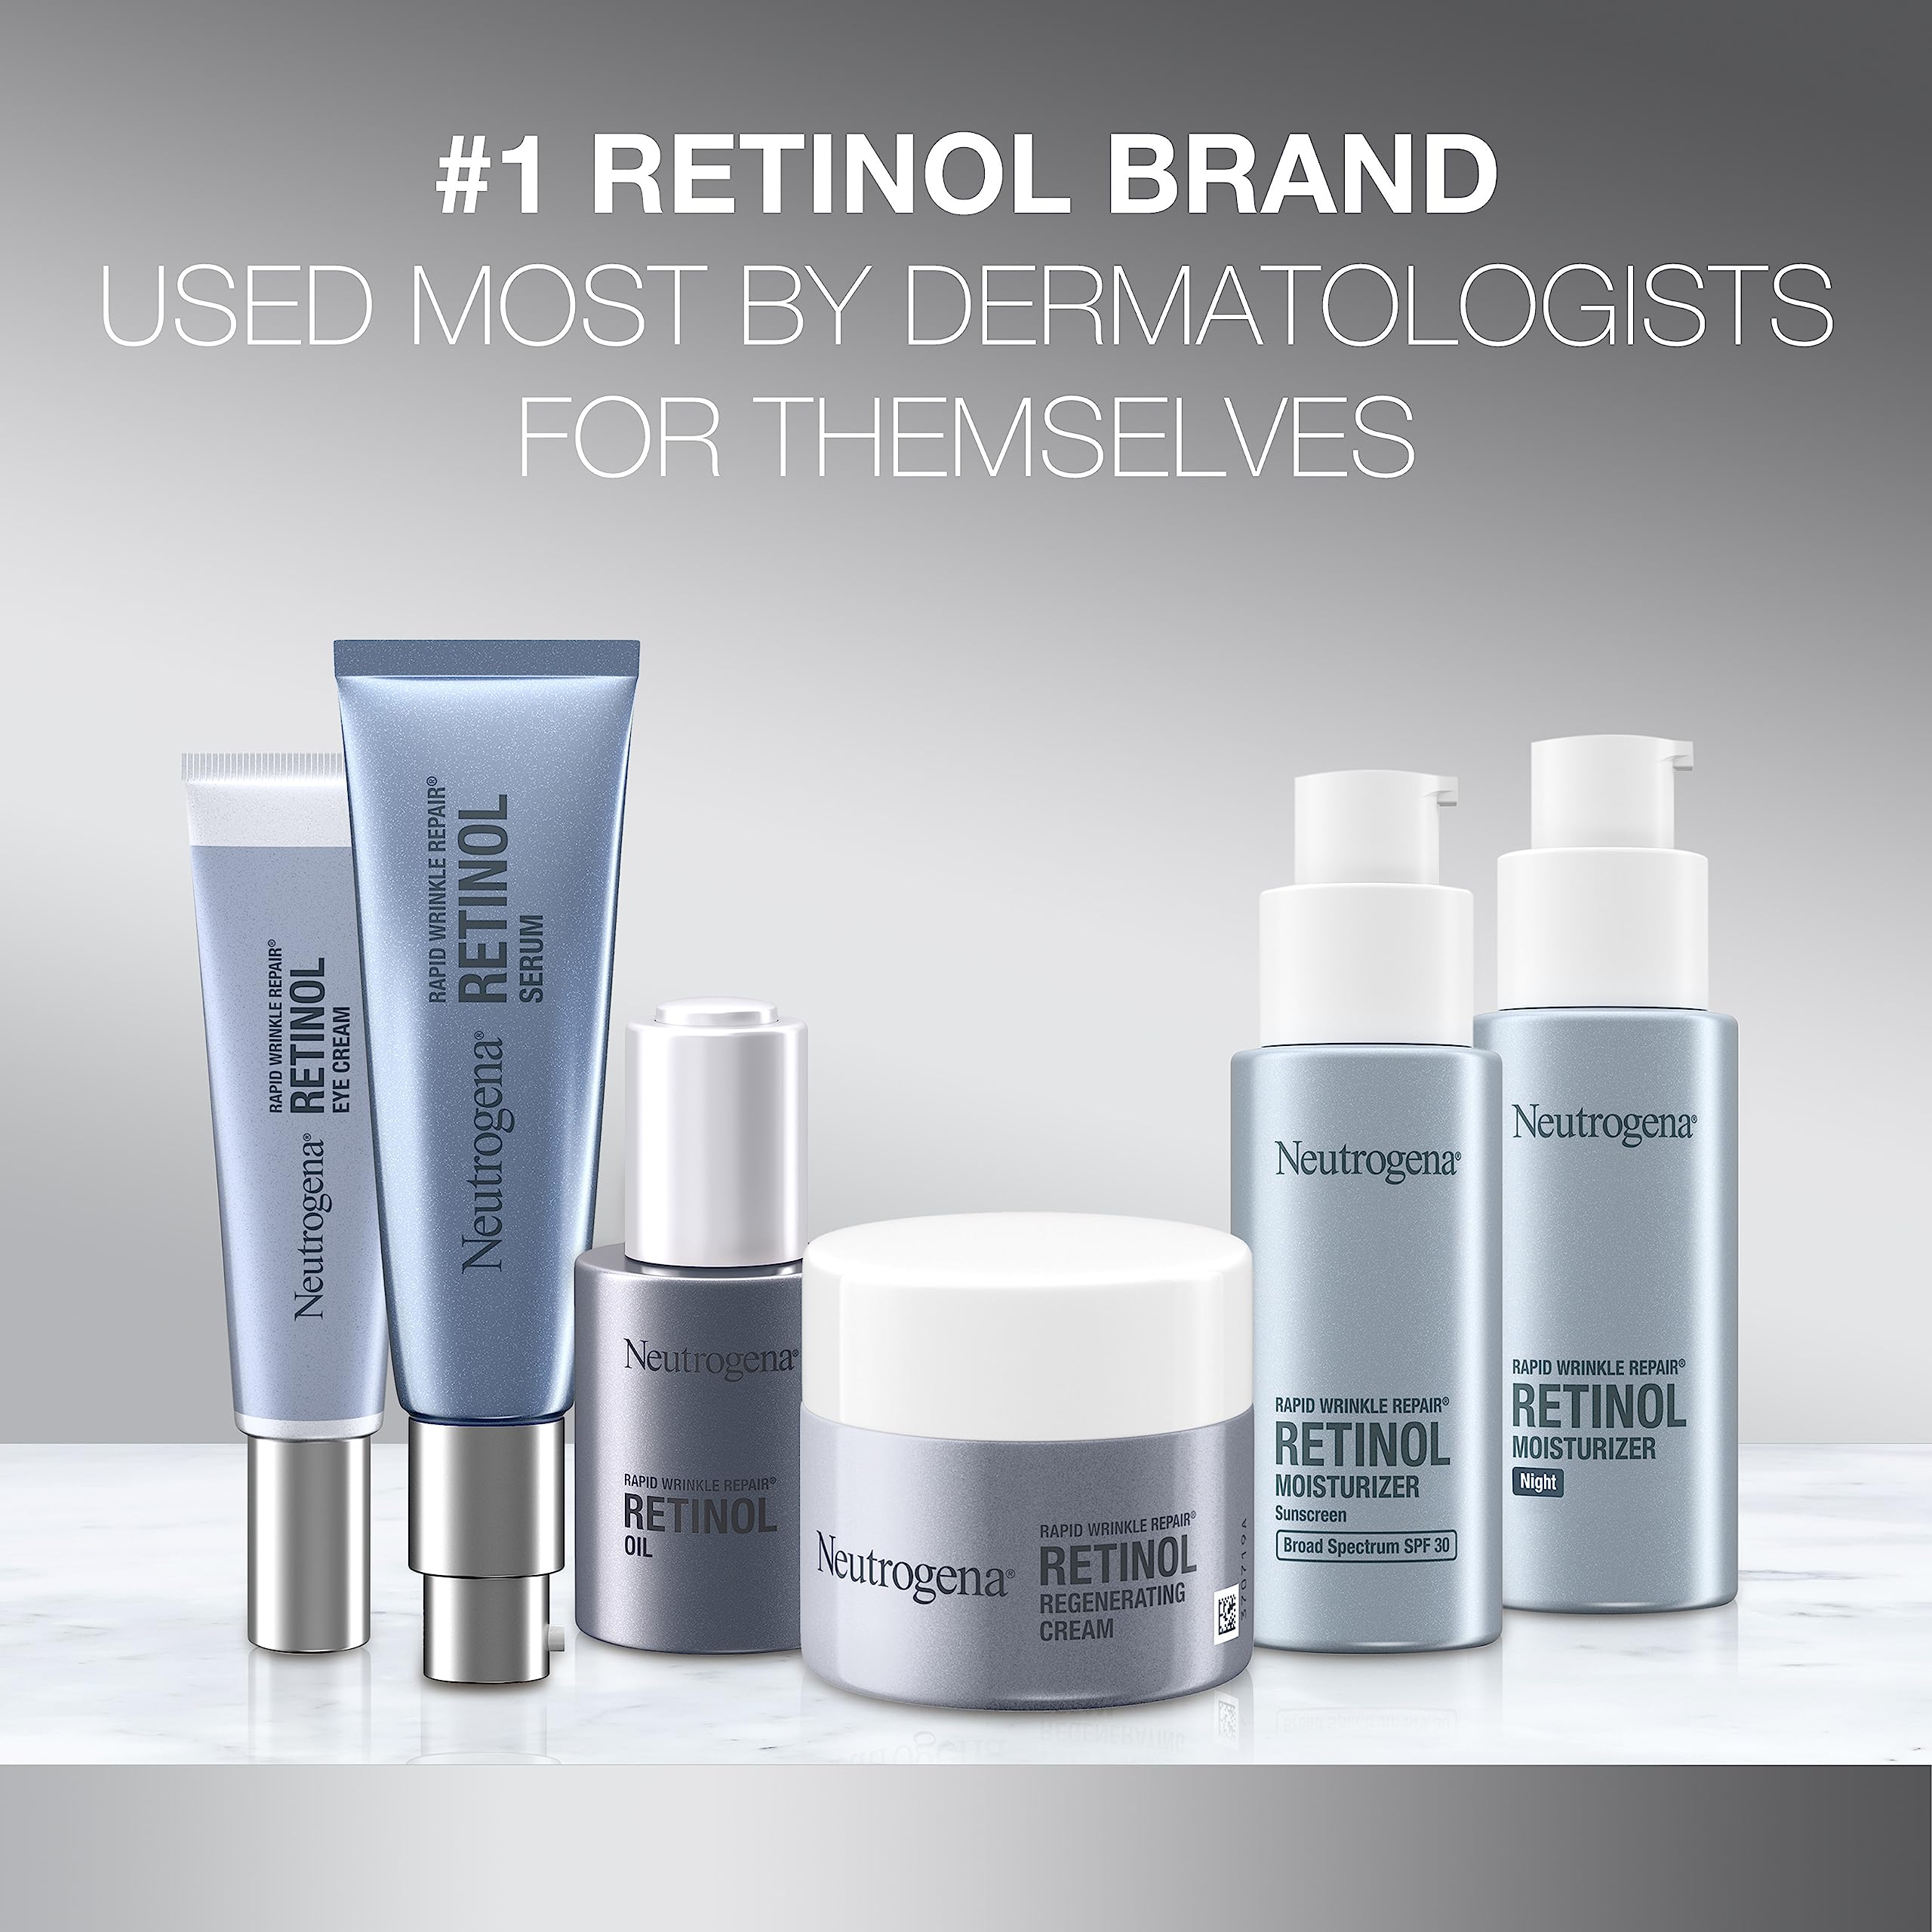 Neutrogena Rapid Wrinkle Repair Retinol Face Moisturizer, Daily Anti-Aging Face Cream with Retinol & Hyaluronic Acid to Fight Fine Lines, Wrinkles, & Dark Spots, 1.7 oz